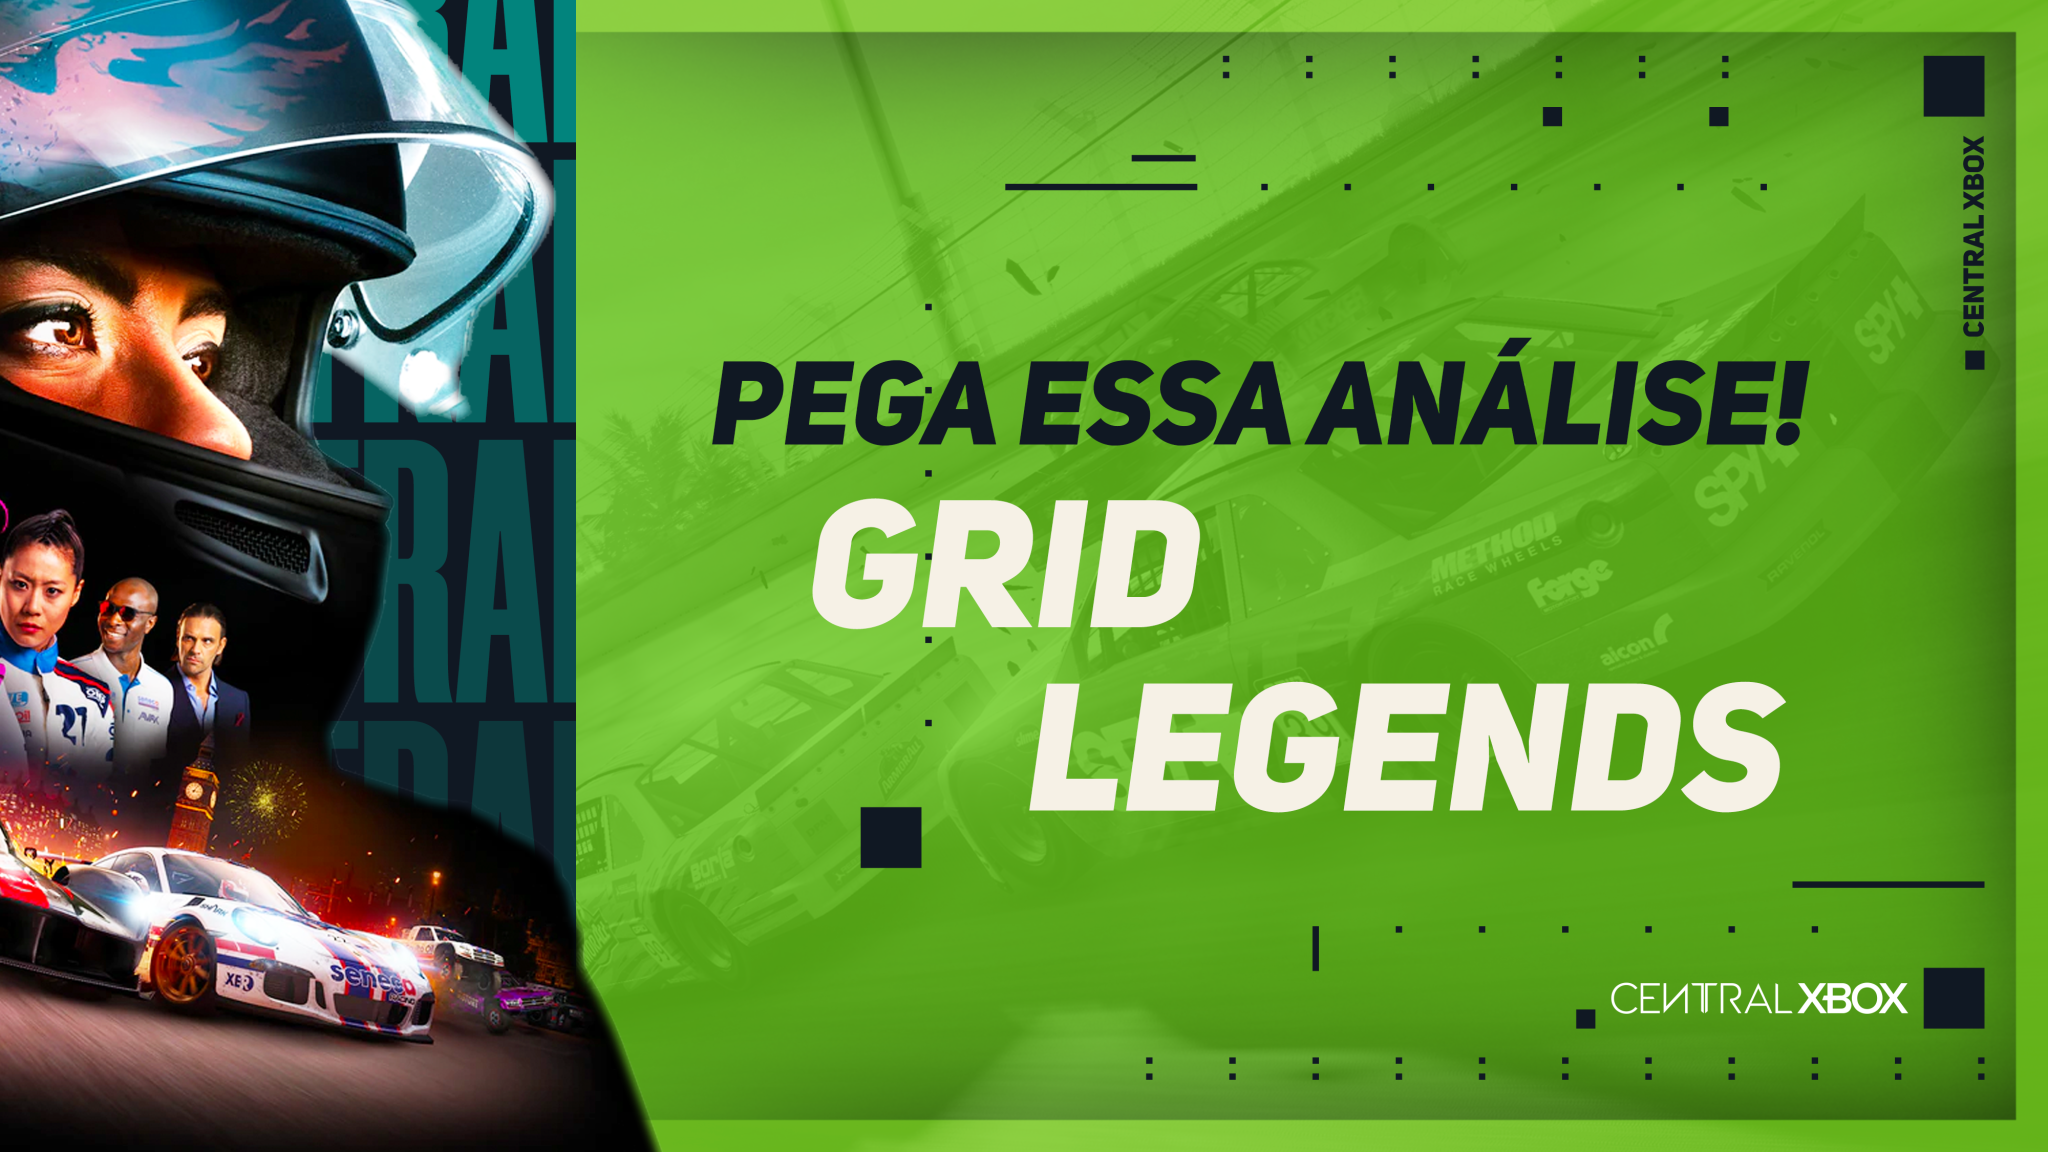 Pega essa Análise! Grid Legends - Central Xbox